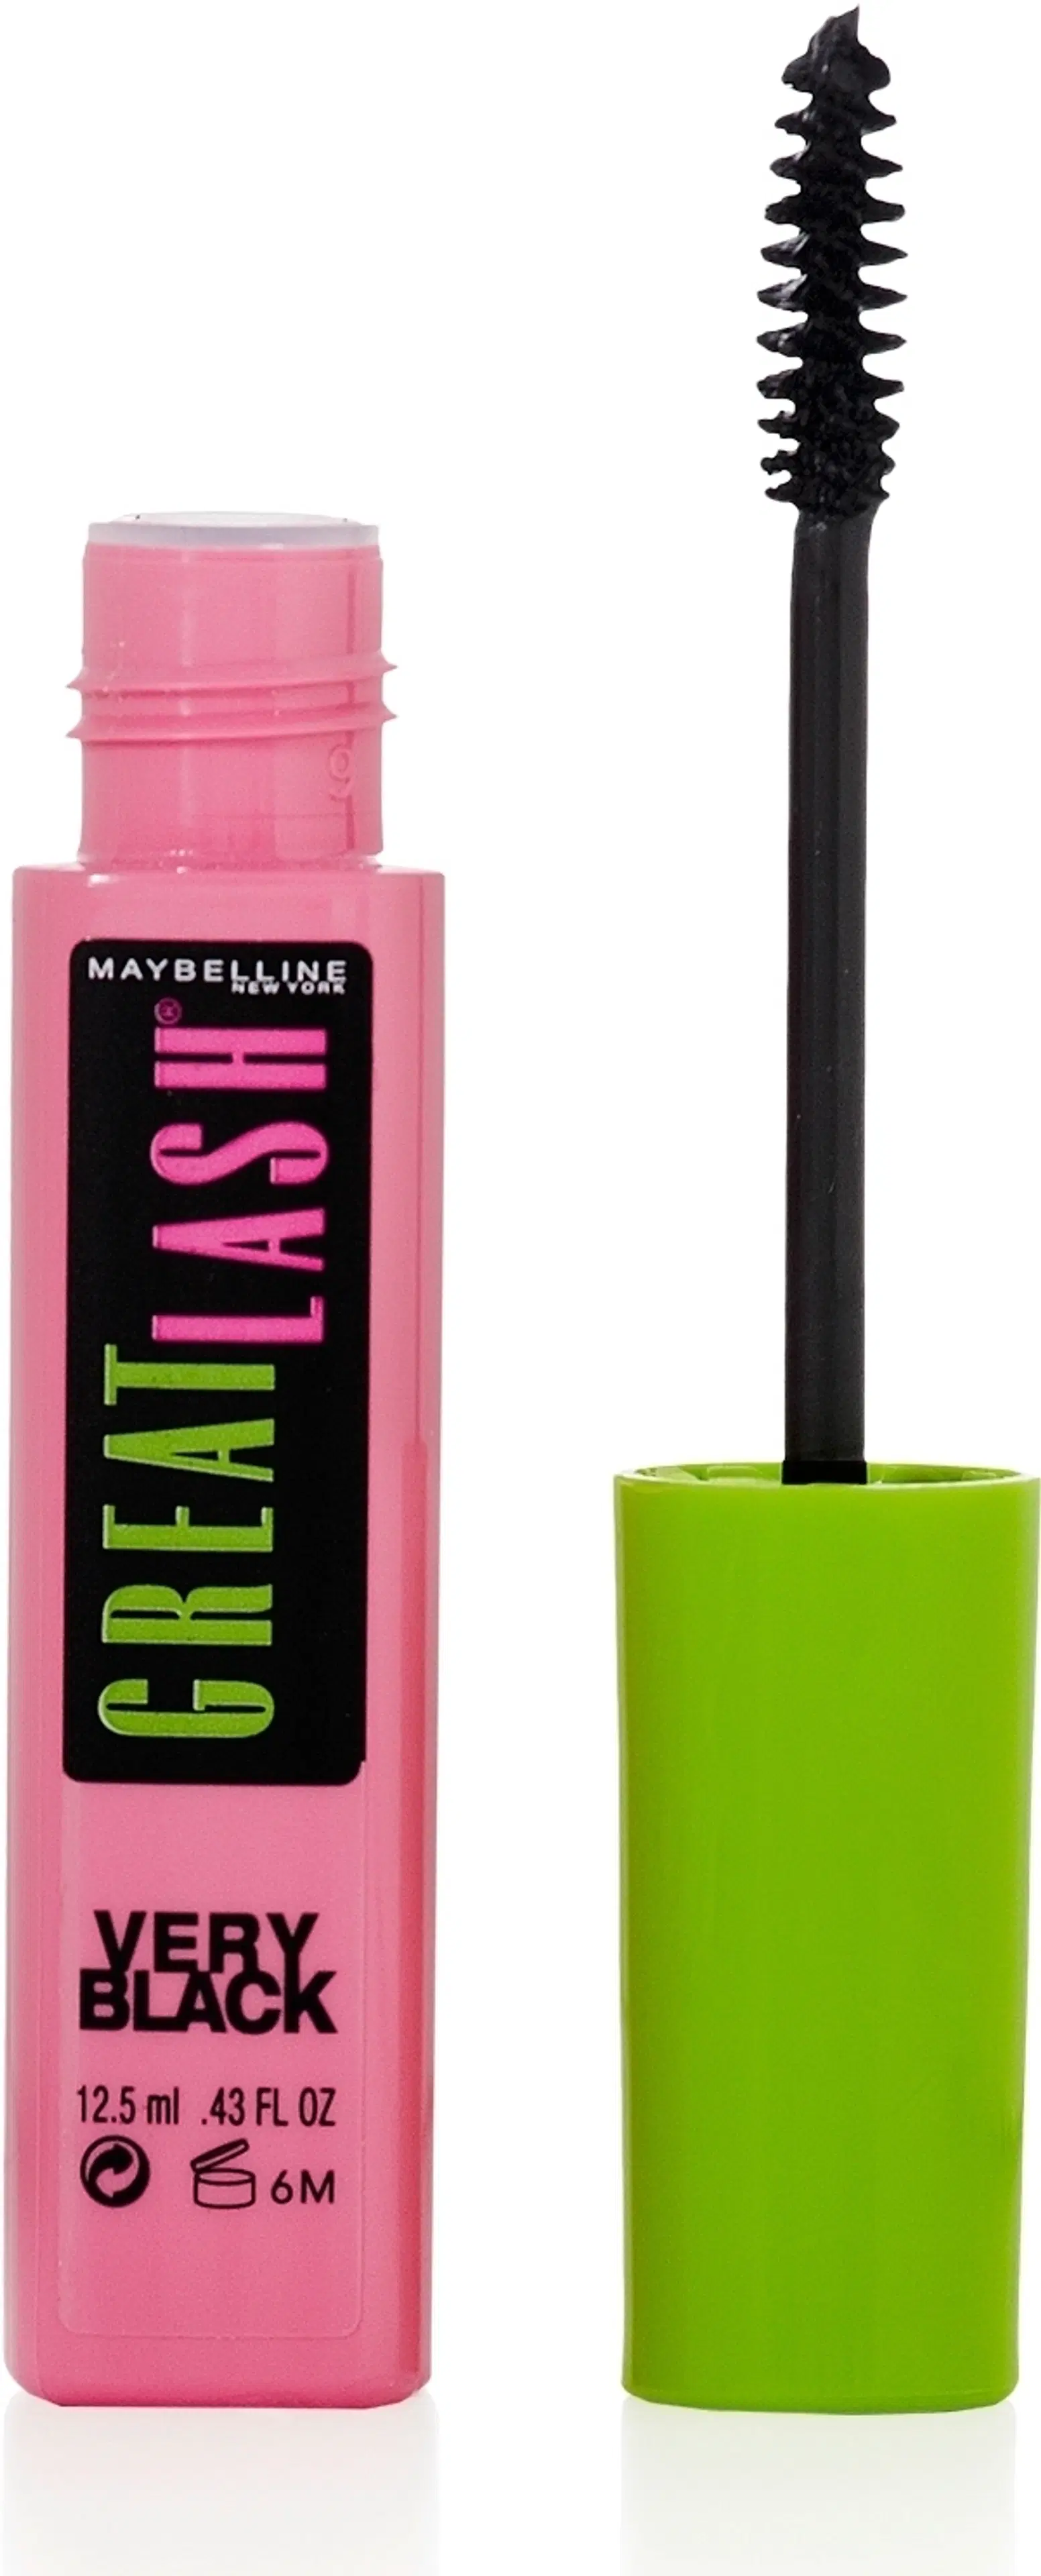 Maybelline New York Great Lash Very Black Mascara 12,5ml